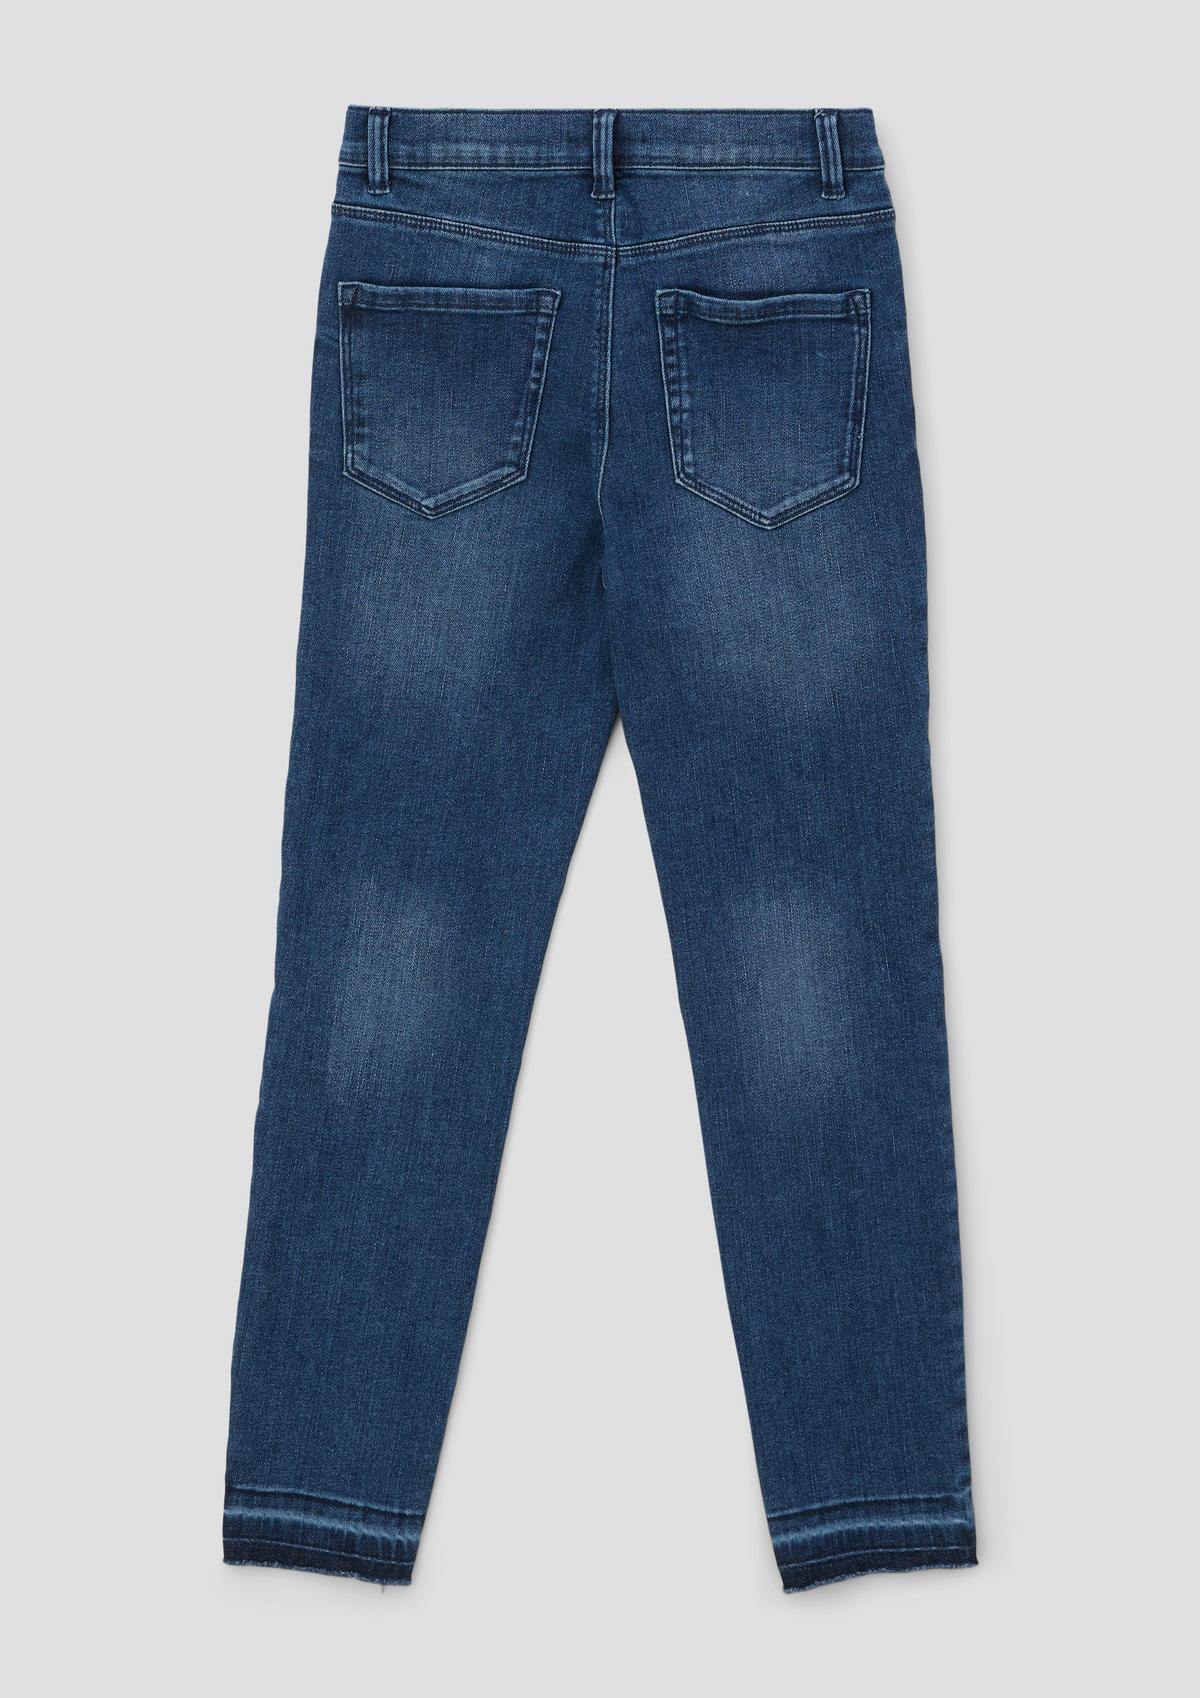 s.Oliver Suri ankle-length jeans / regular fit / mid rise / slim leg